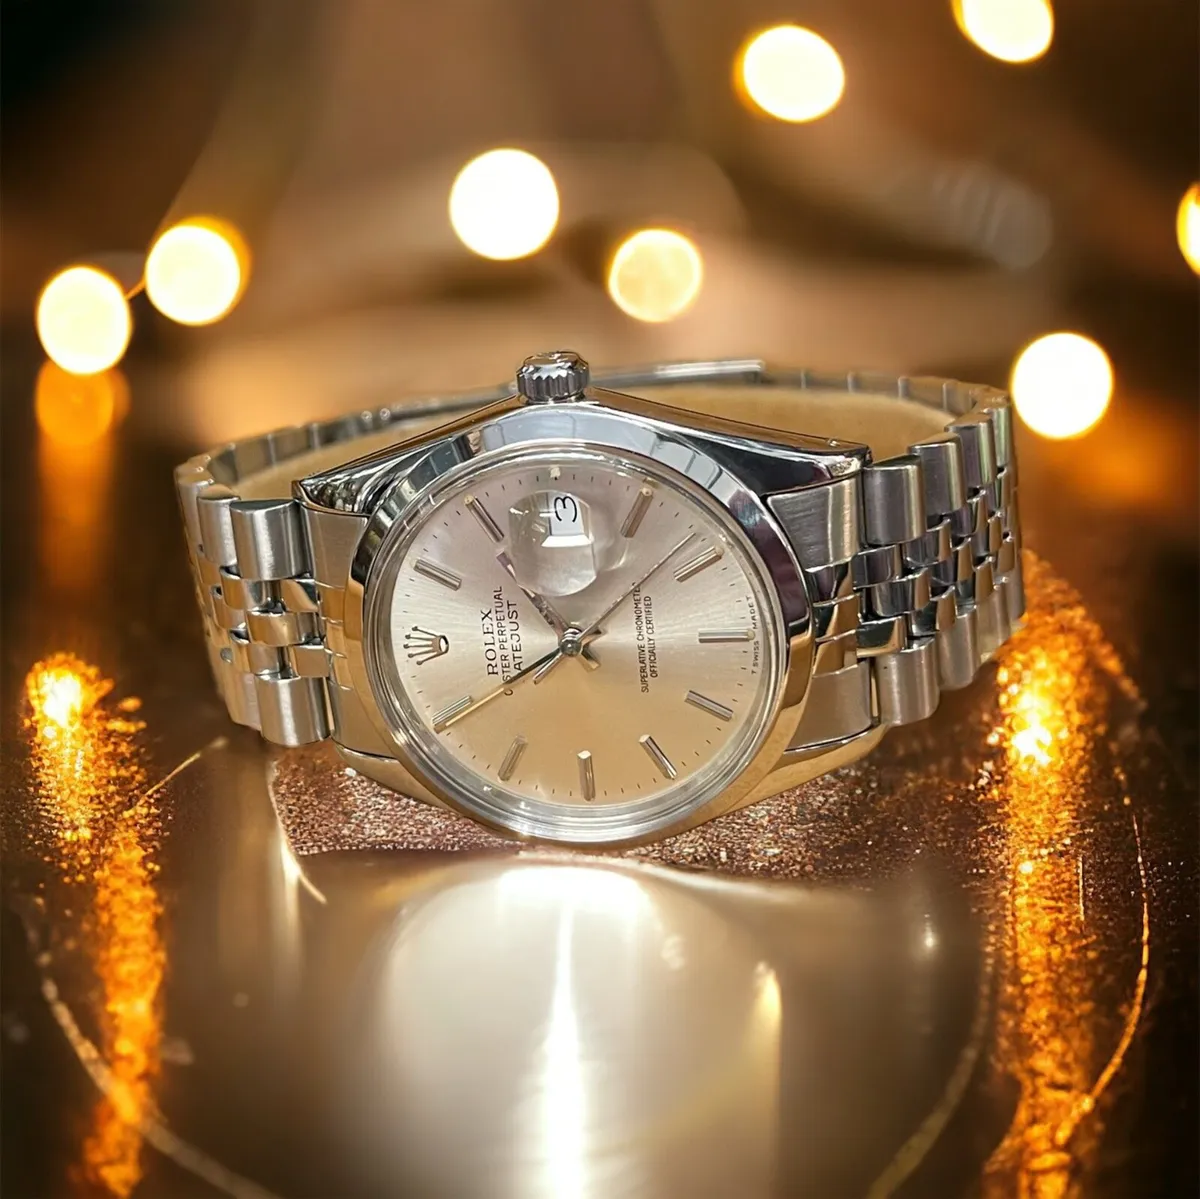 NI Watch Company - Rolex - Image 1